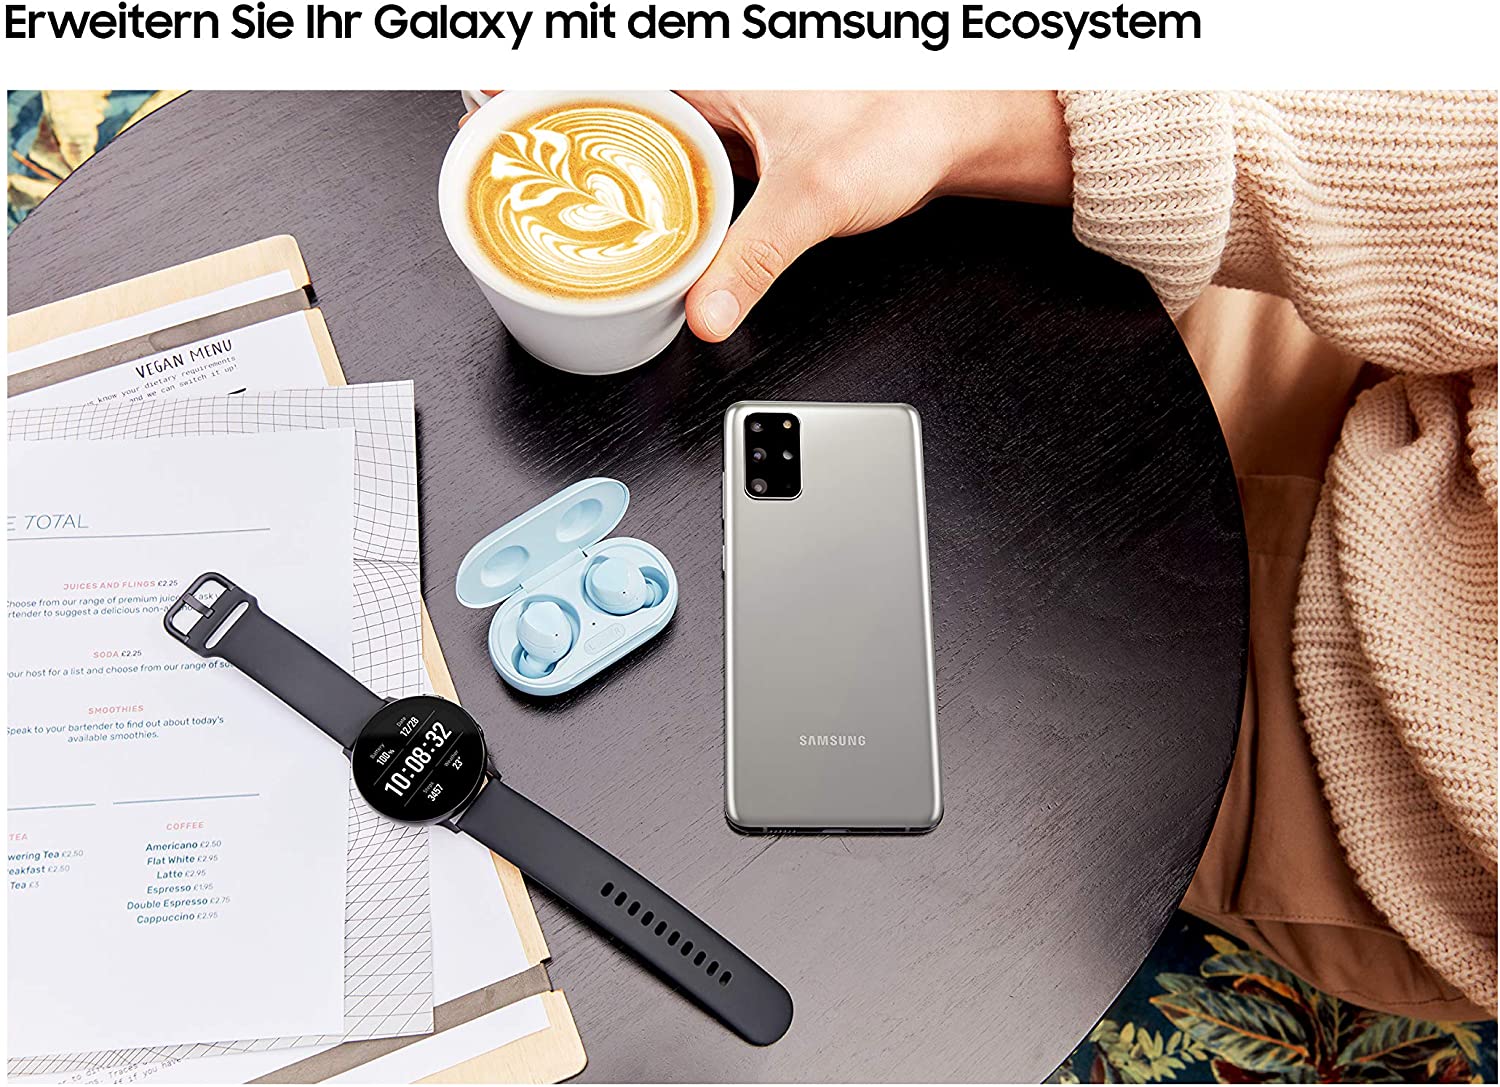 samsung galaxy s20+ smartphone bundle, hybrid sim, black